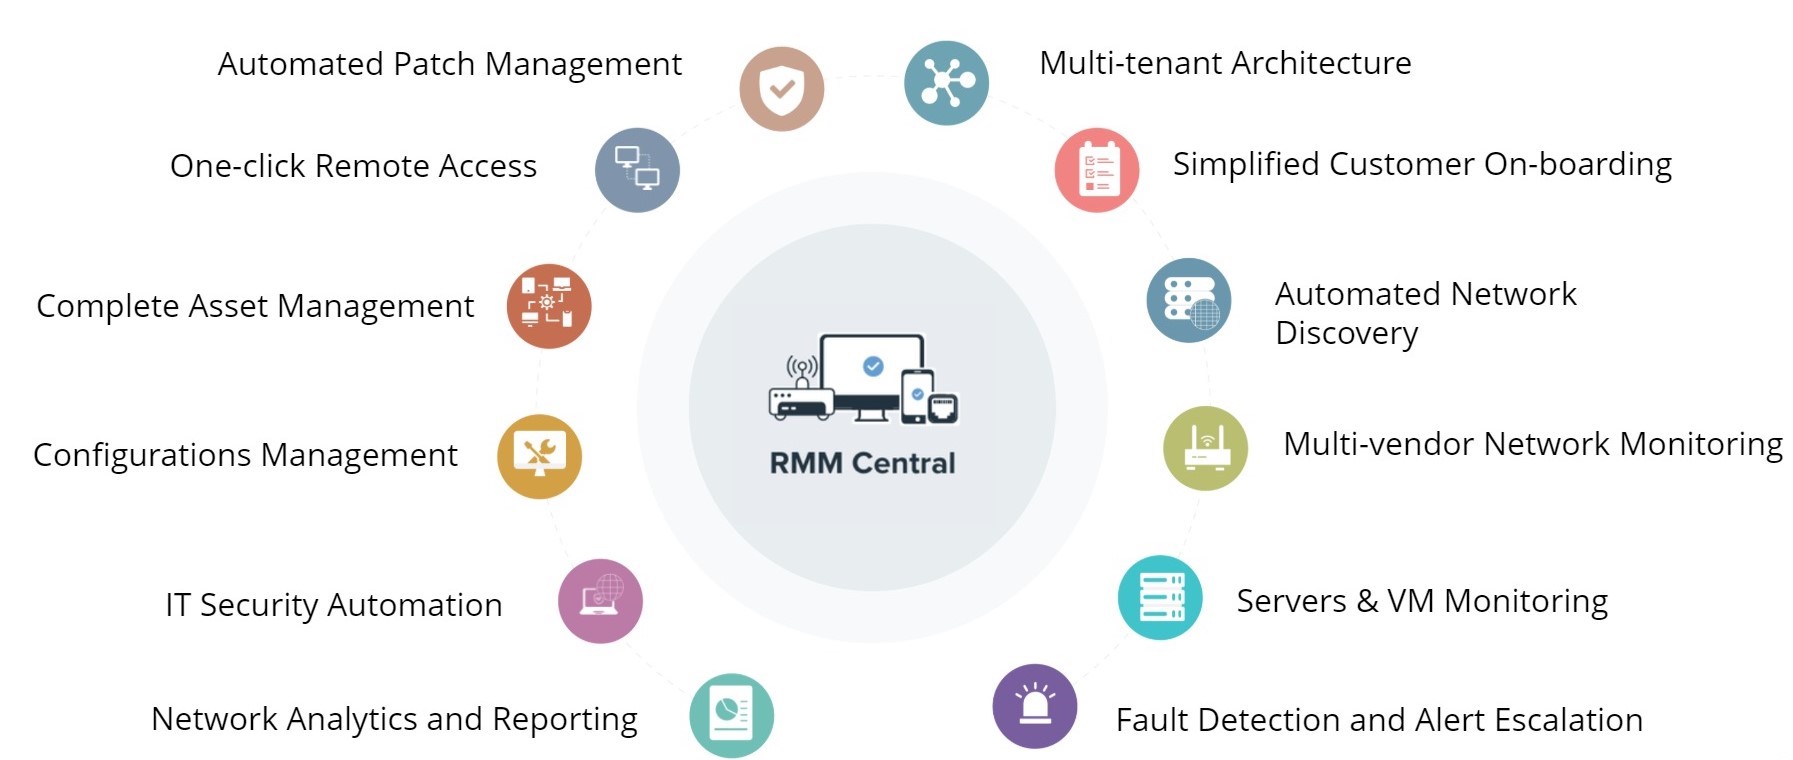 MSP Software Solution - ManageEngine RMM Central